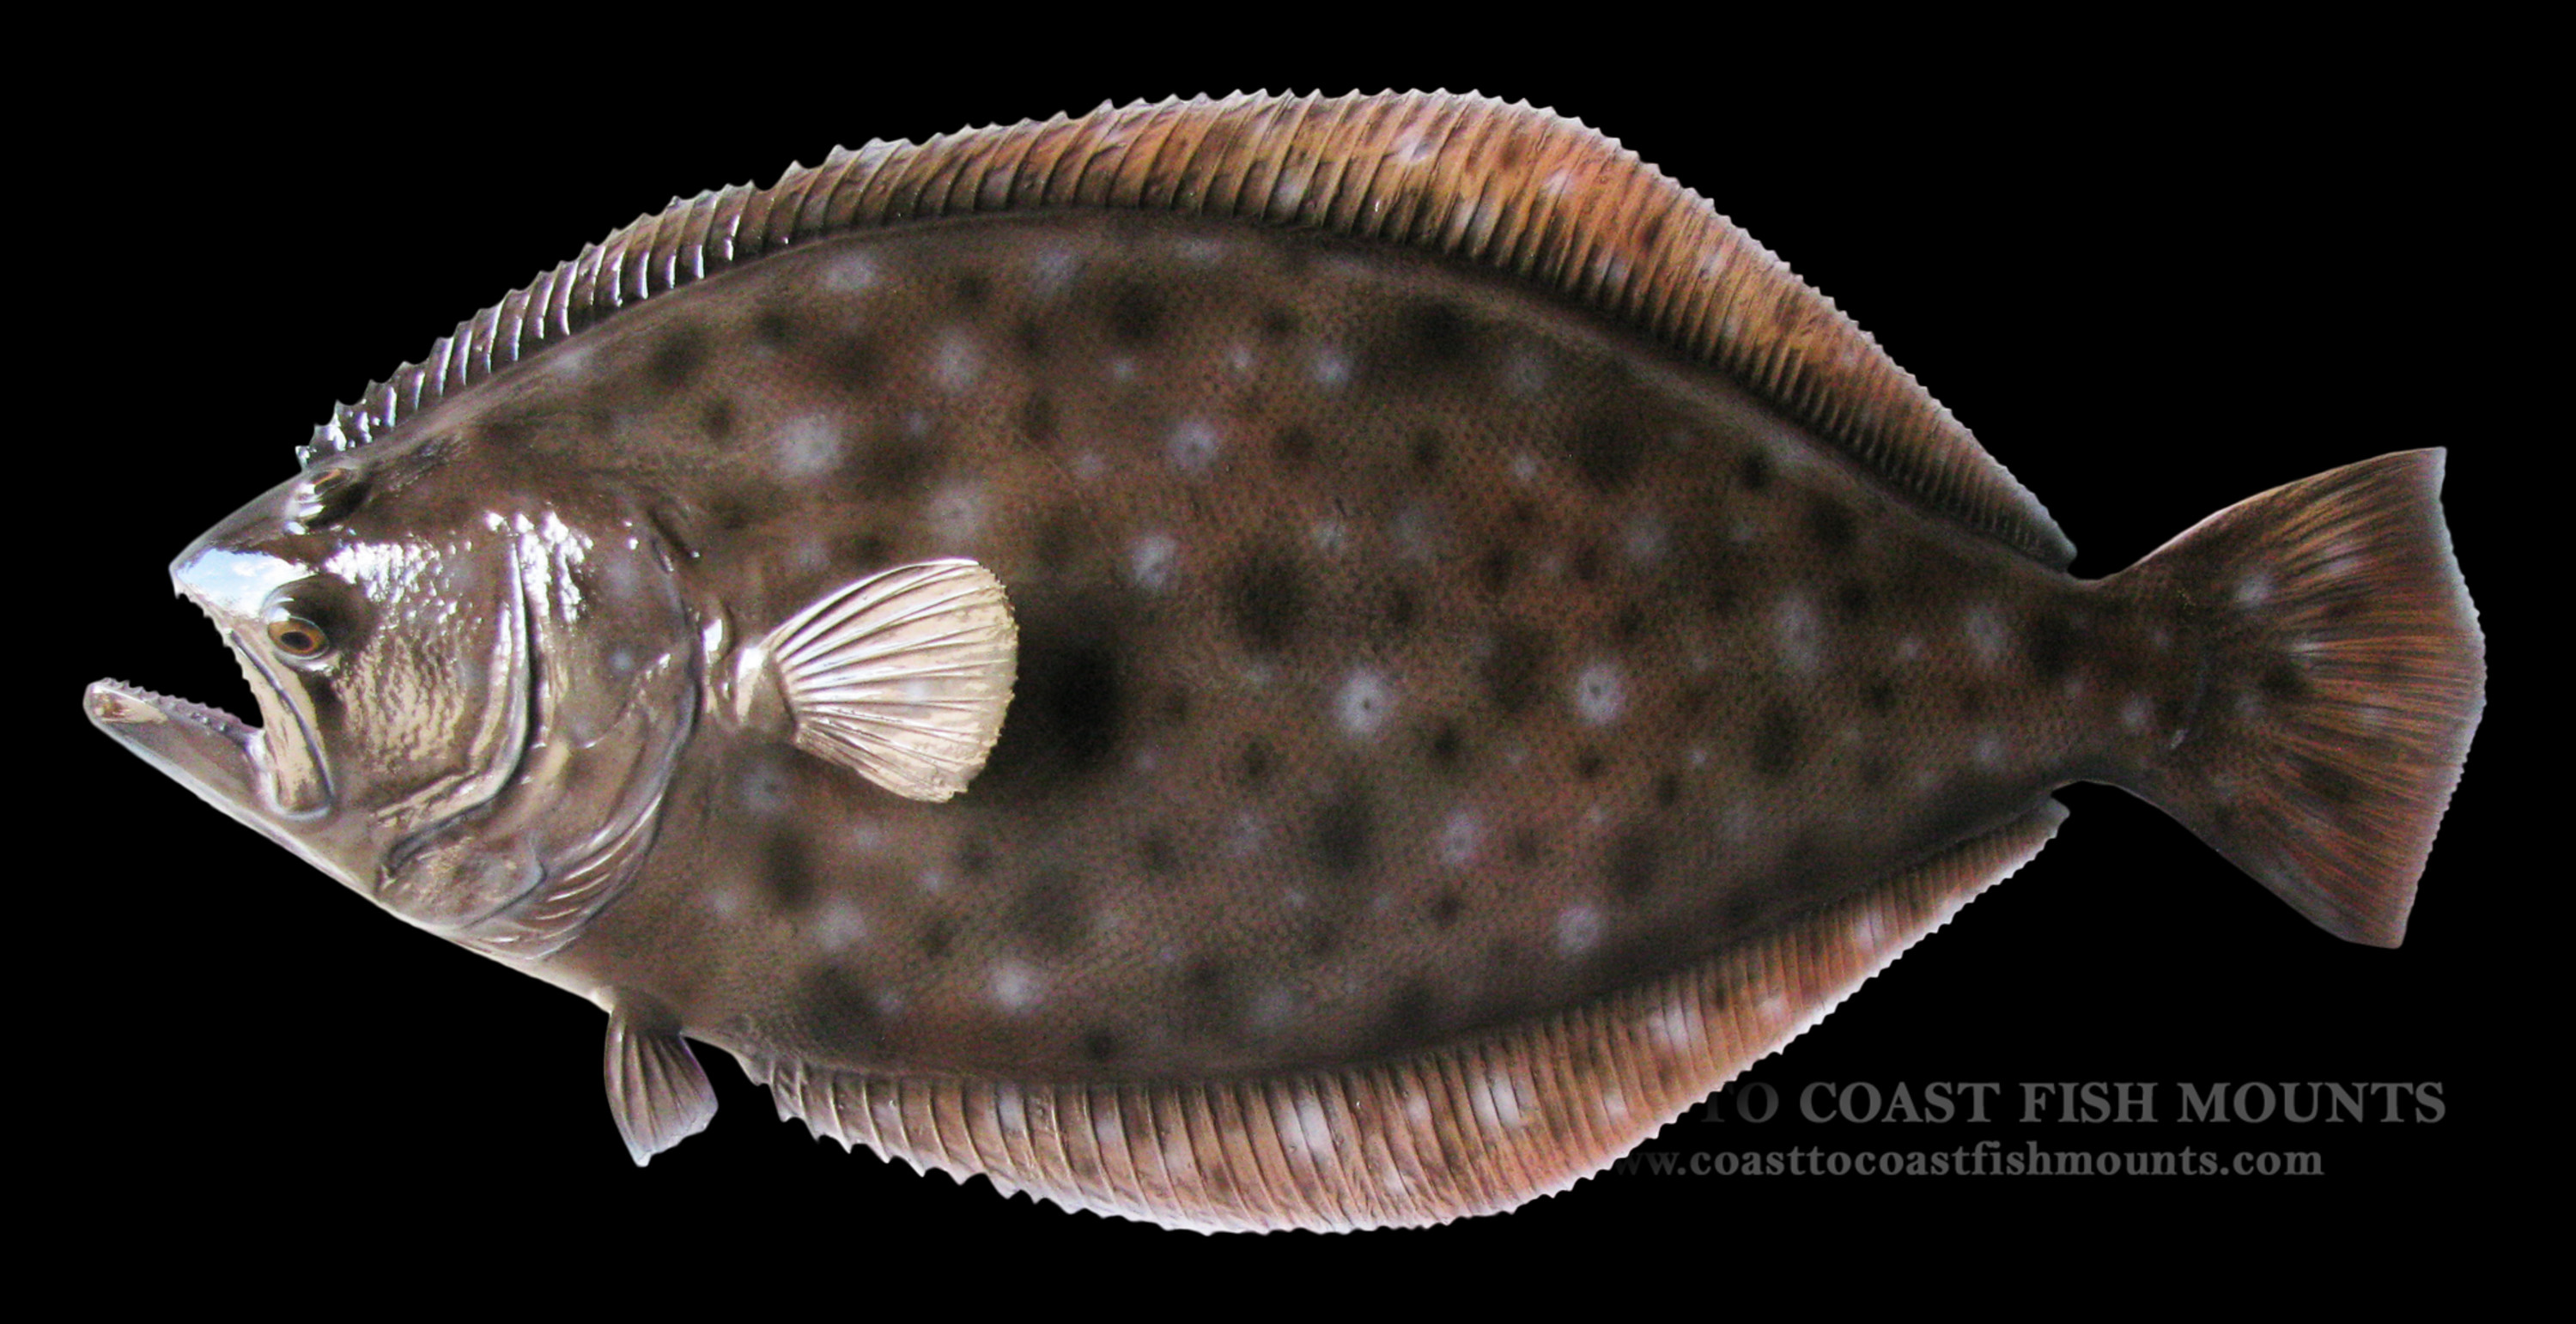 Flounder (Fluke) Fish Mount and Fish Replicas | Coast-to-Coast